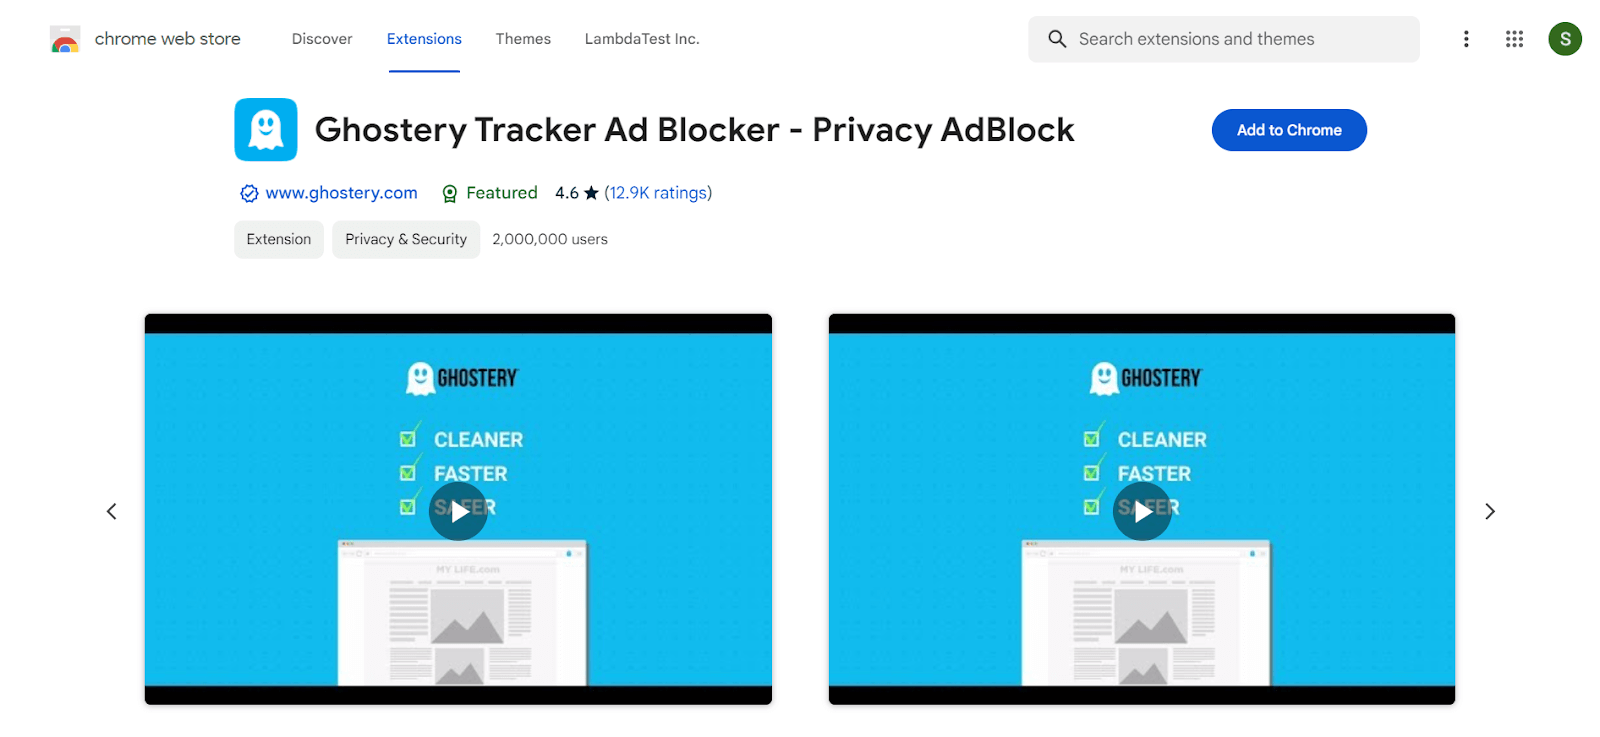 Ghostery Tracker Ad Blocker